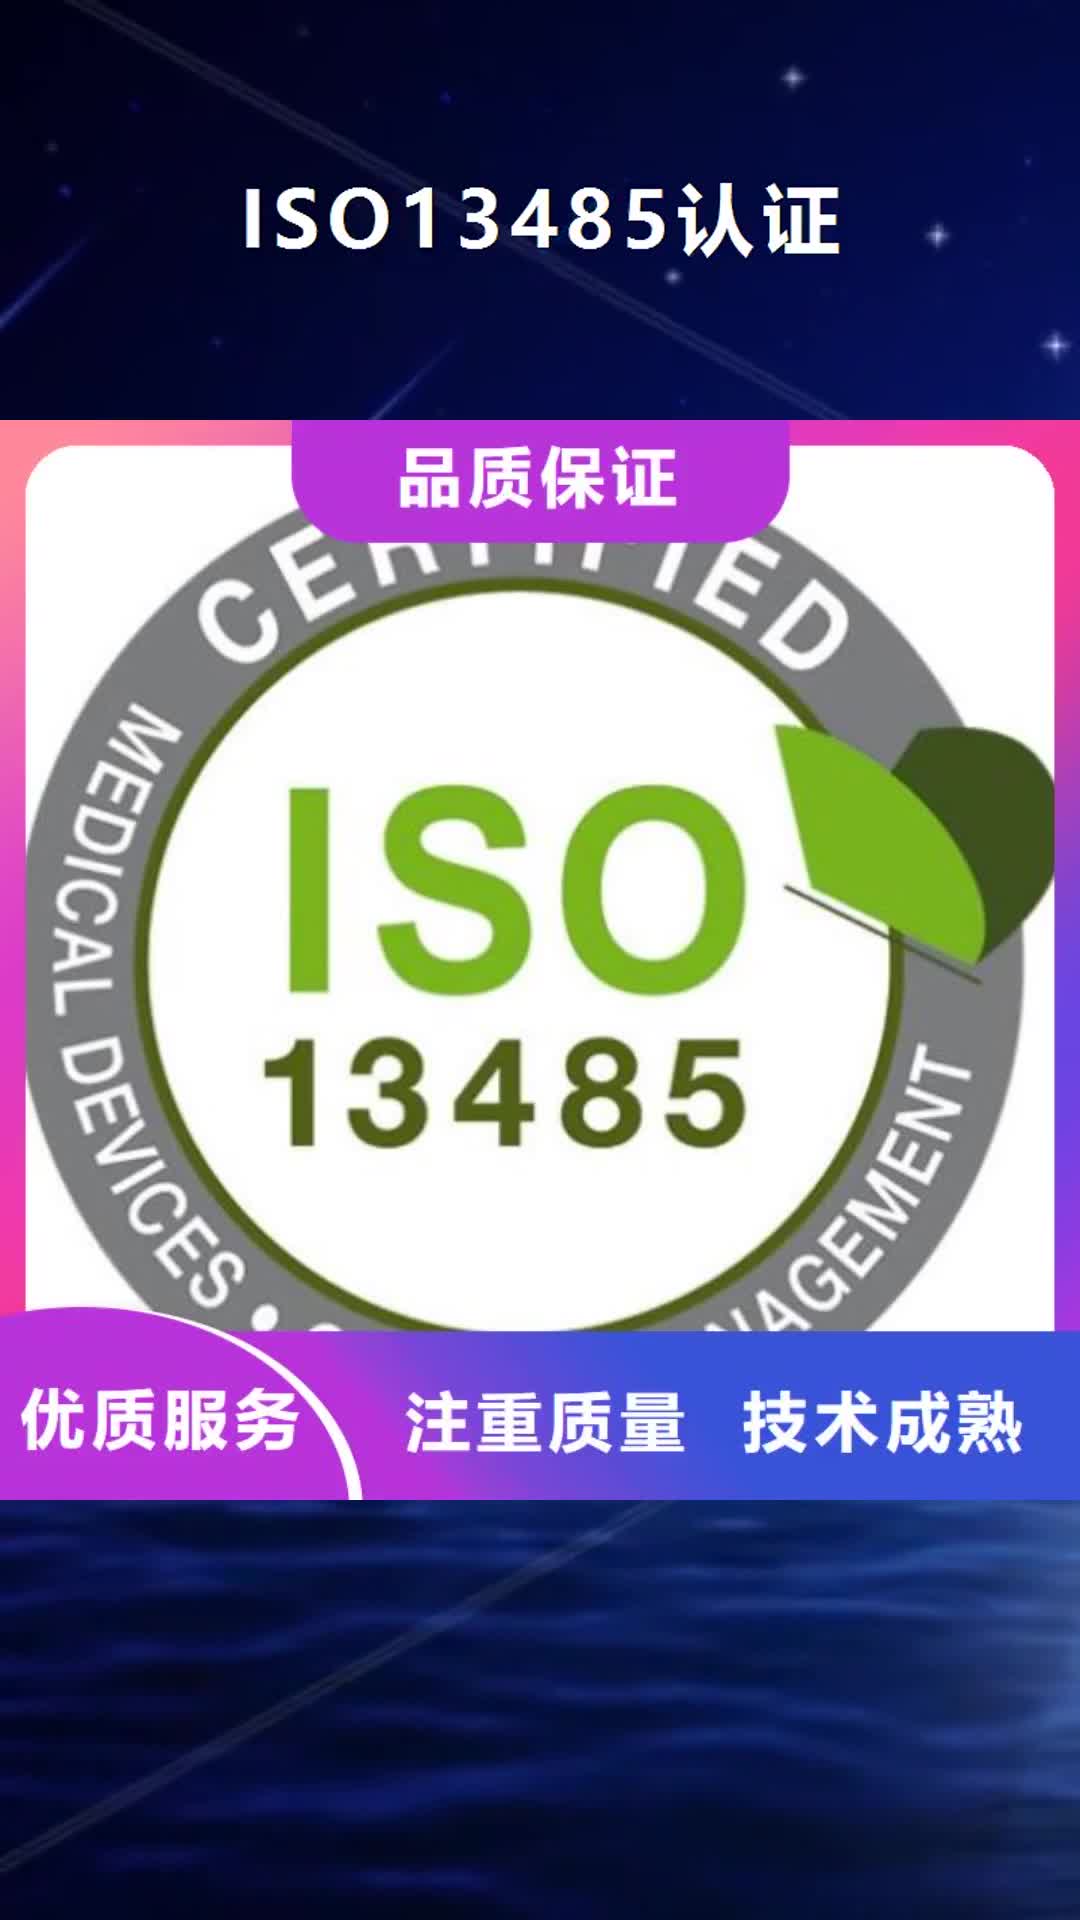 【甘肃 ISO13485认证专业】